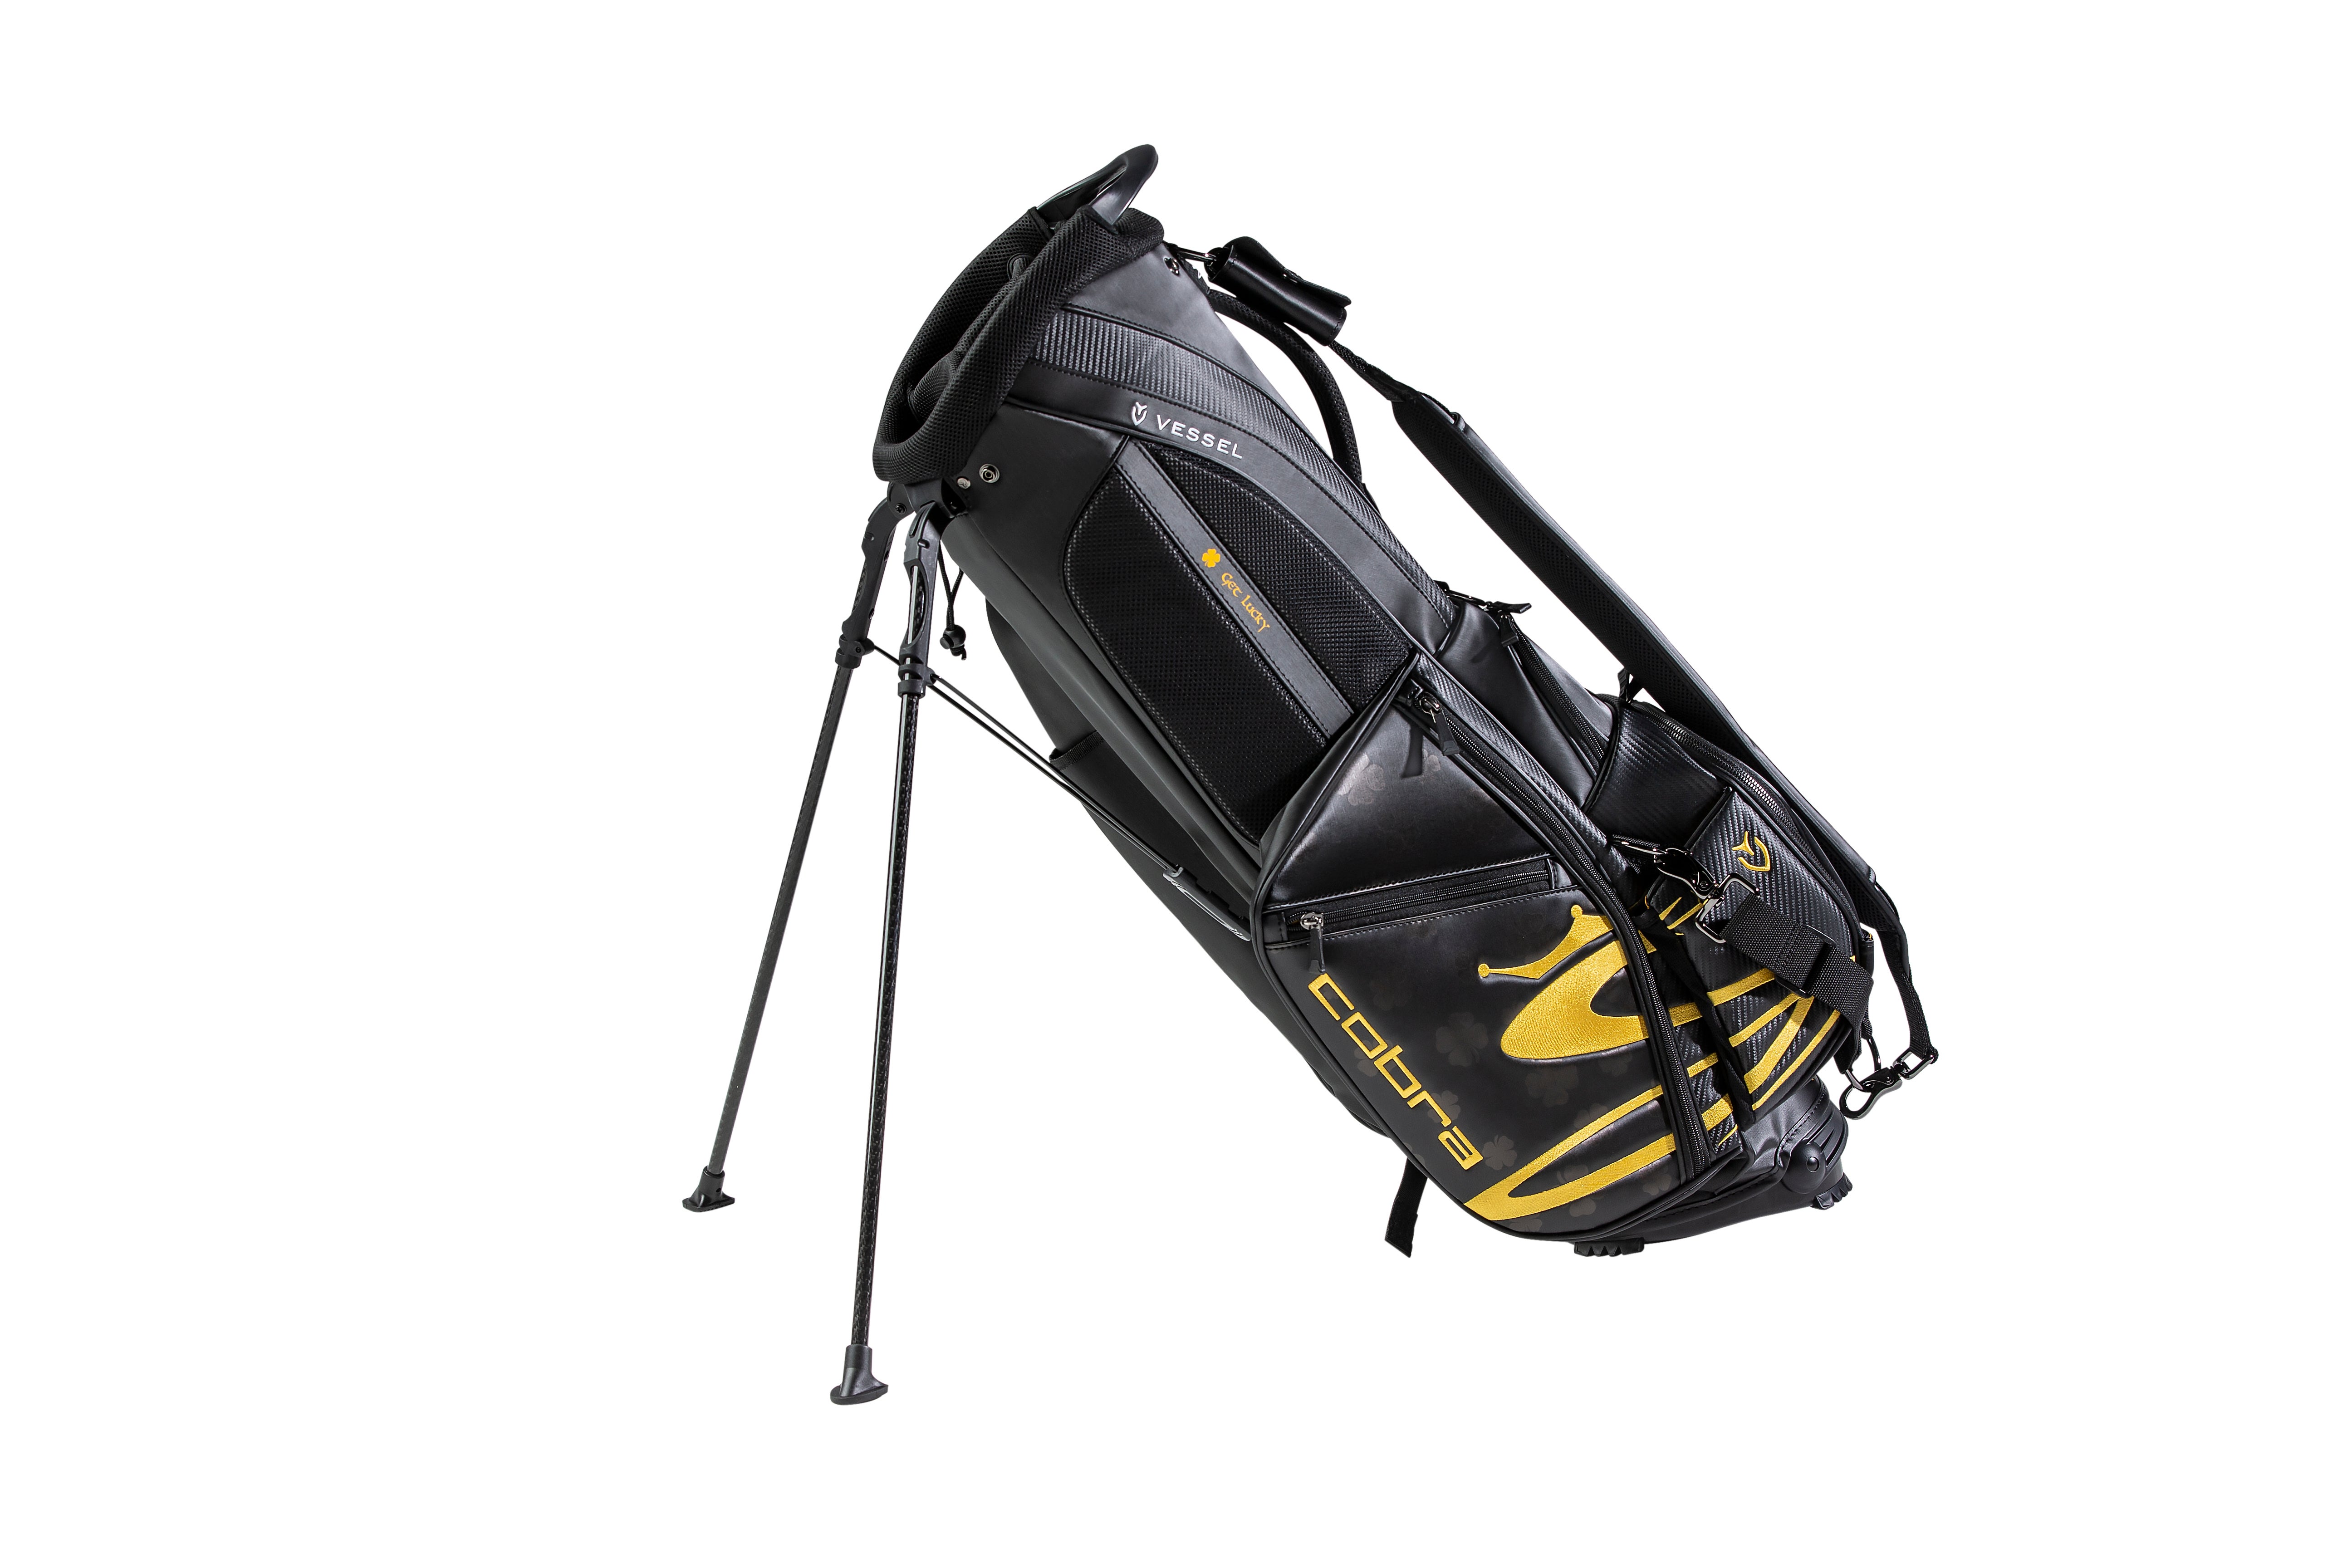 Bryson DeChambeau's custom Cobra St. Patrick's Day golf bag. 